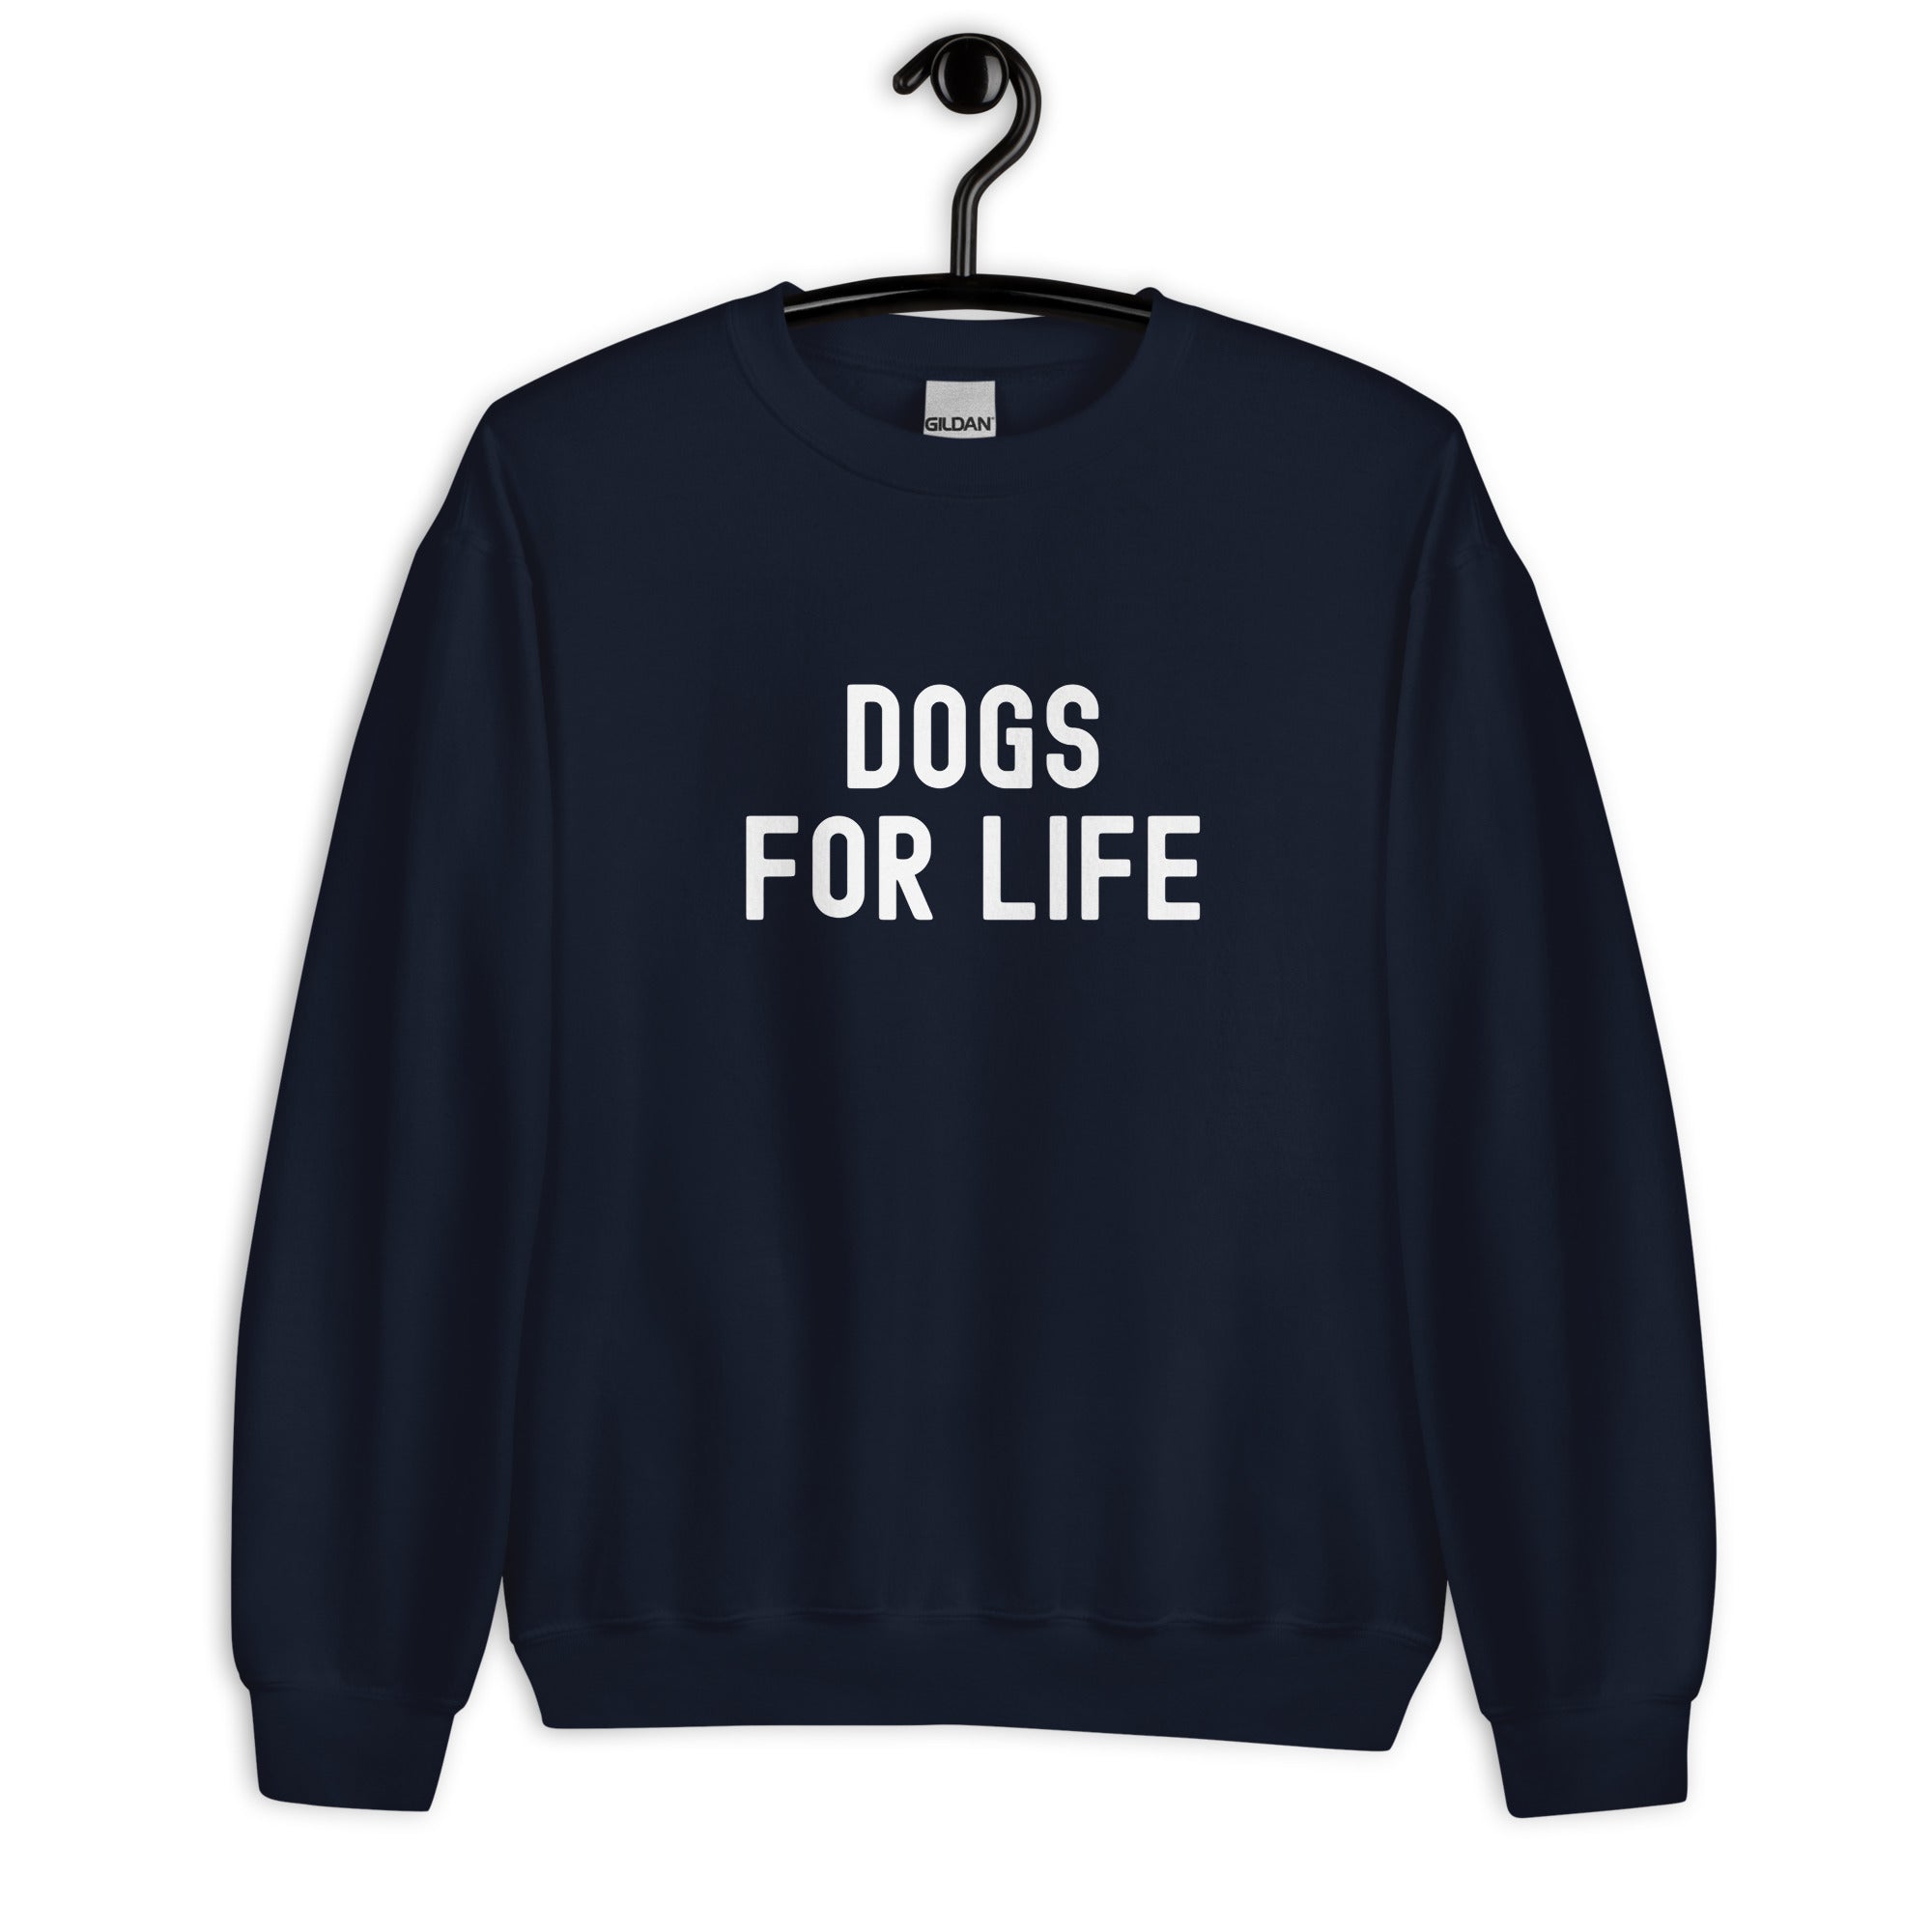 Unisex Sweatshirt | Cats for life